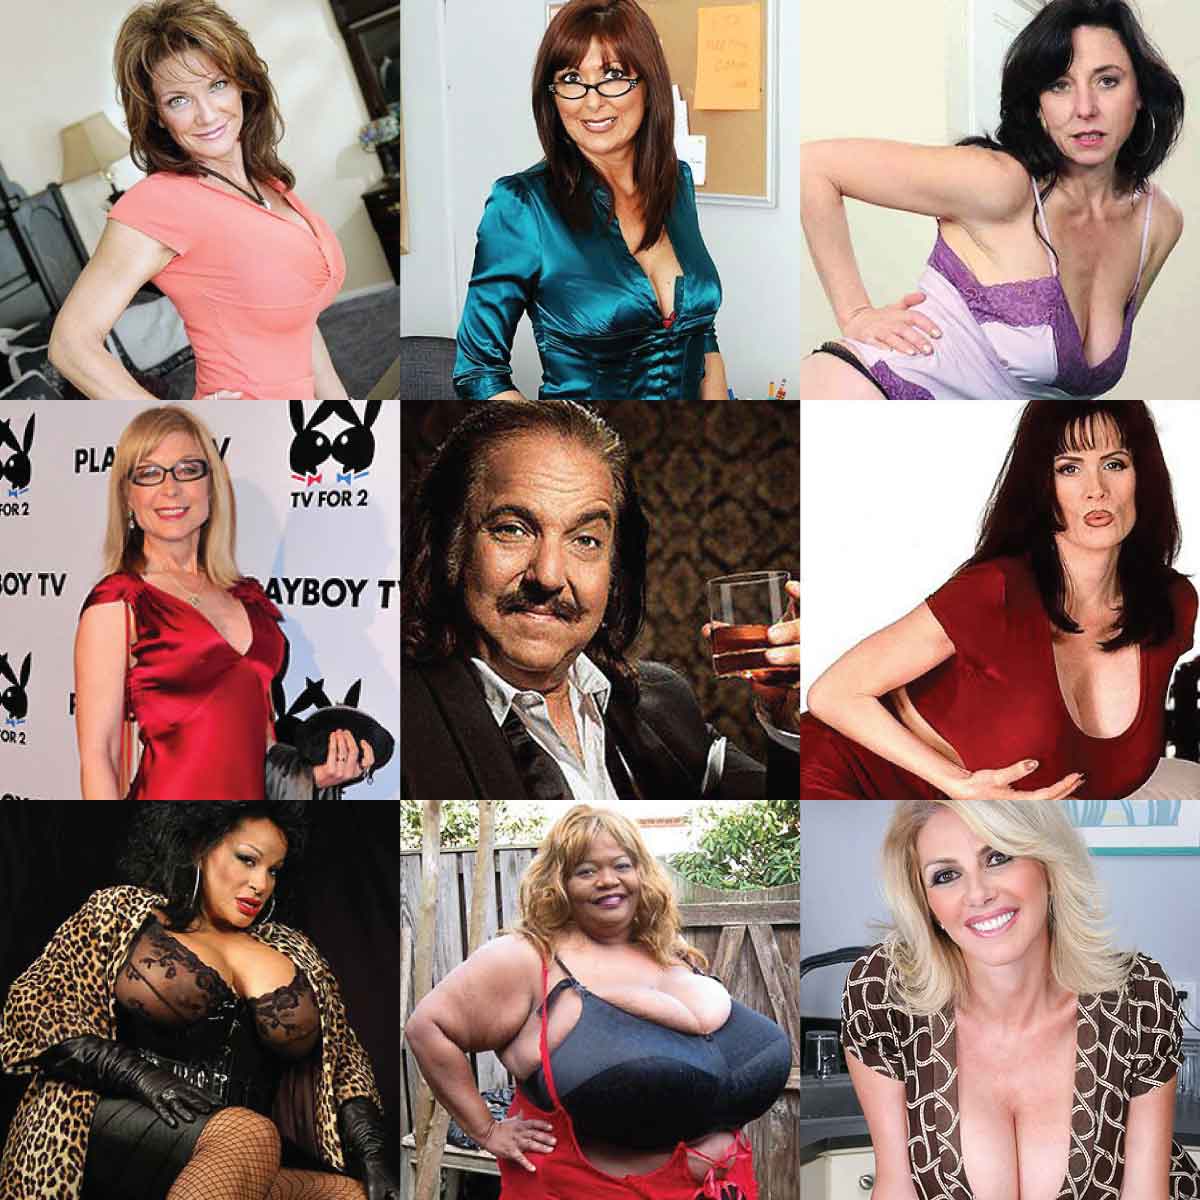 Older porn actresses